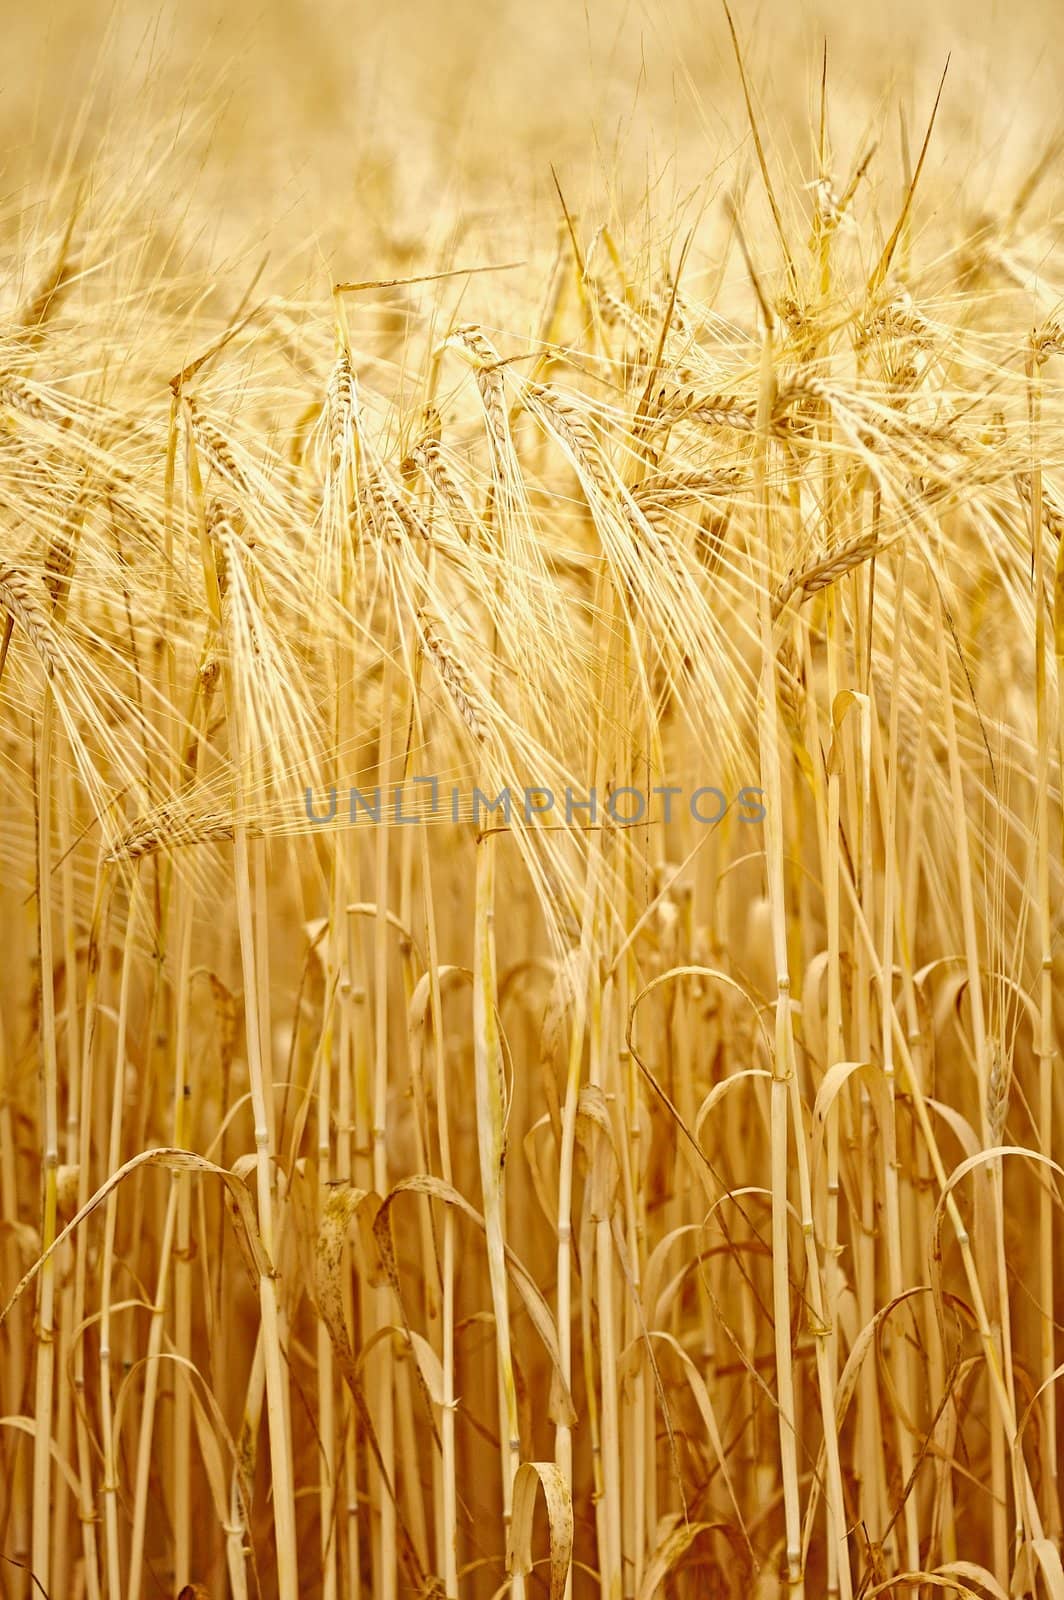 Golden Grain by styf22